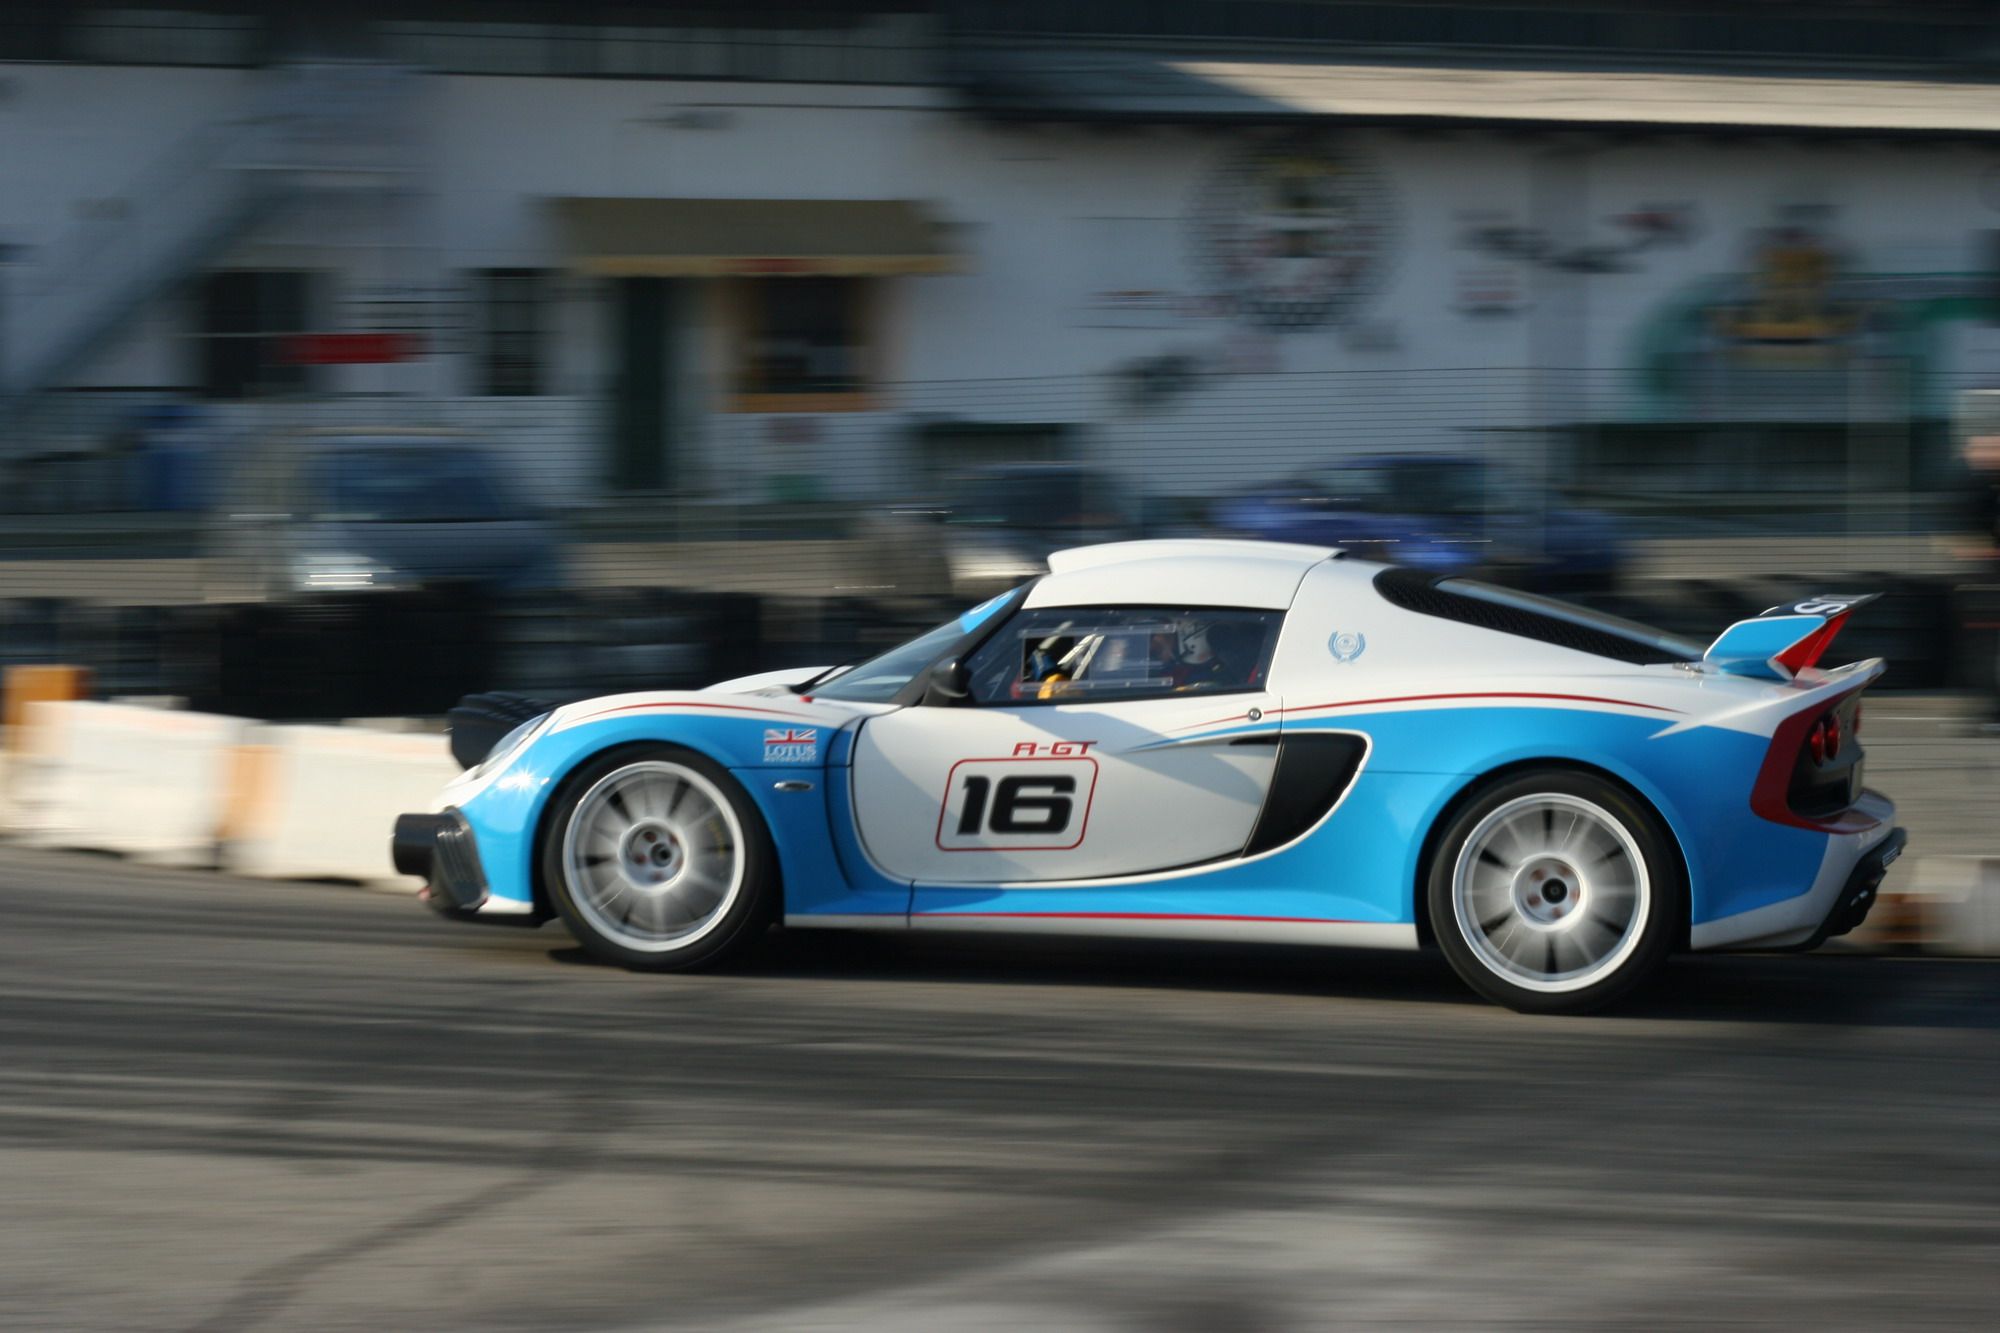 2012 Lotus Exige R-GT